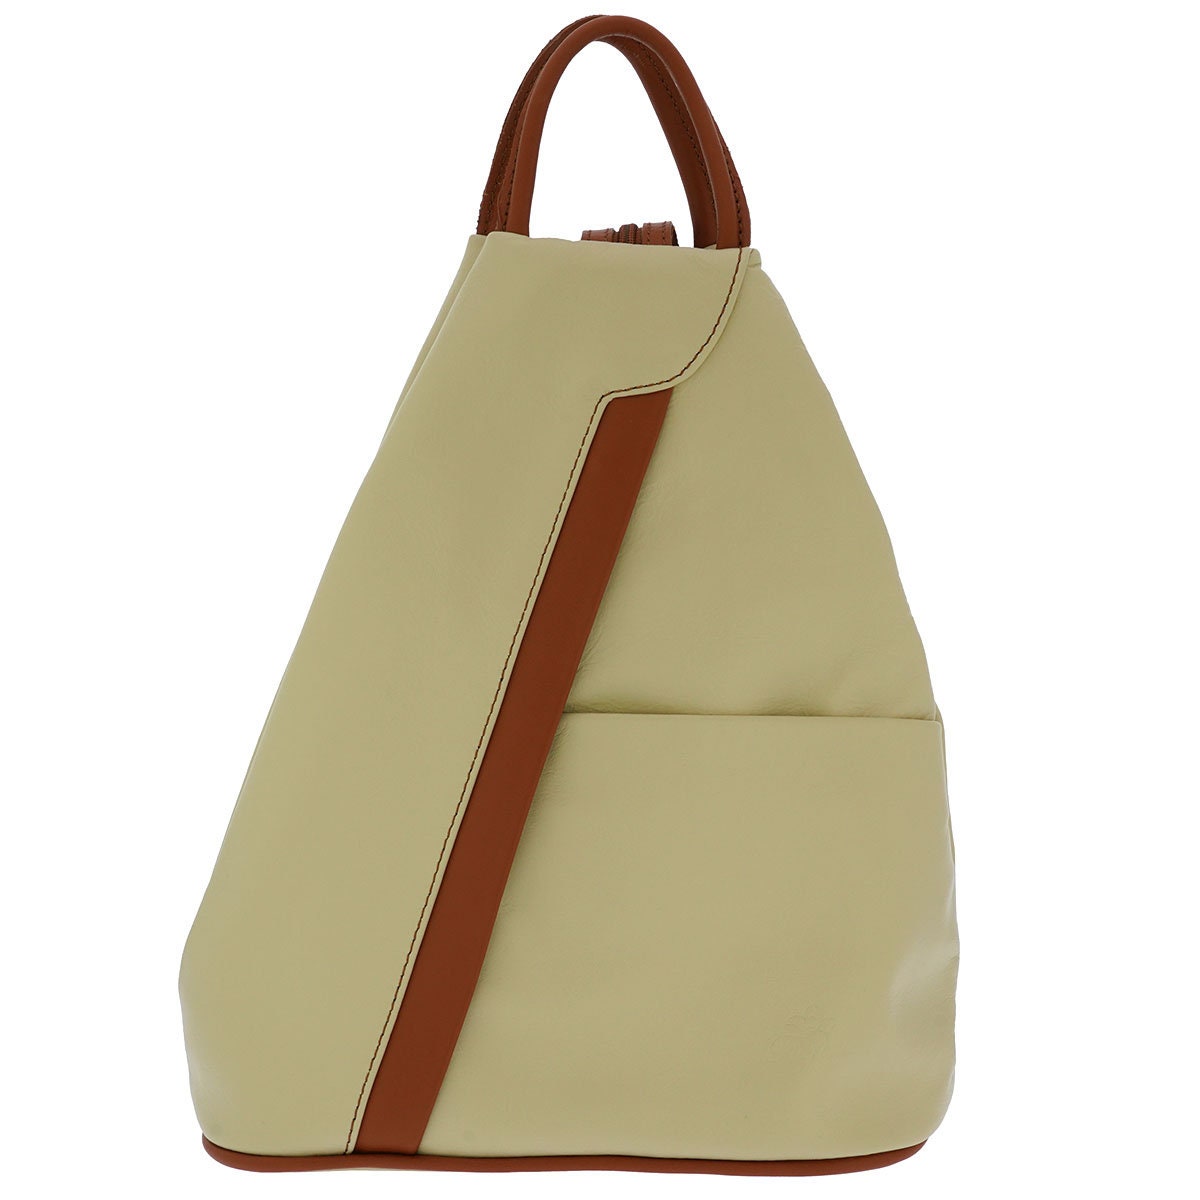 Fioretta Italian Genuine Leather Top Handle Backpack Purse Shoulder Bag Handbag Rucksack for Women